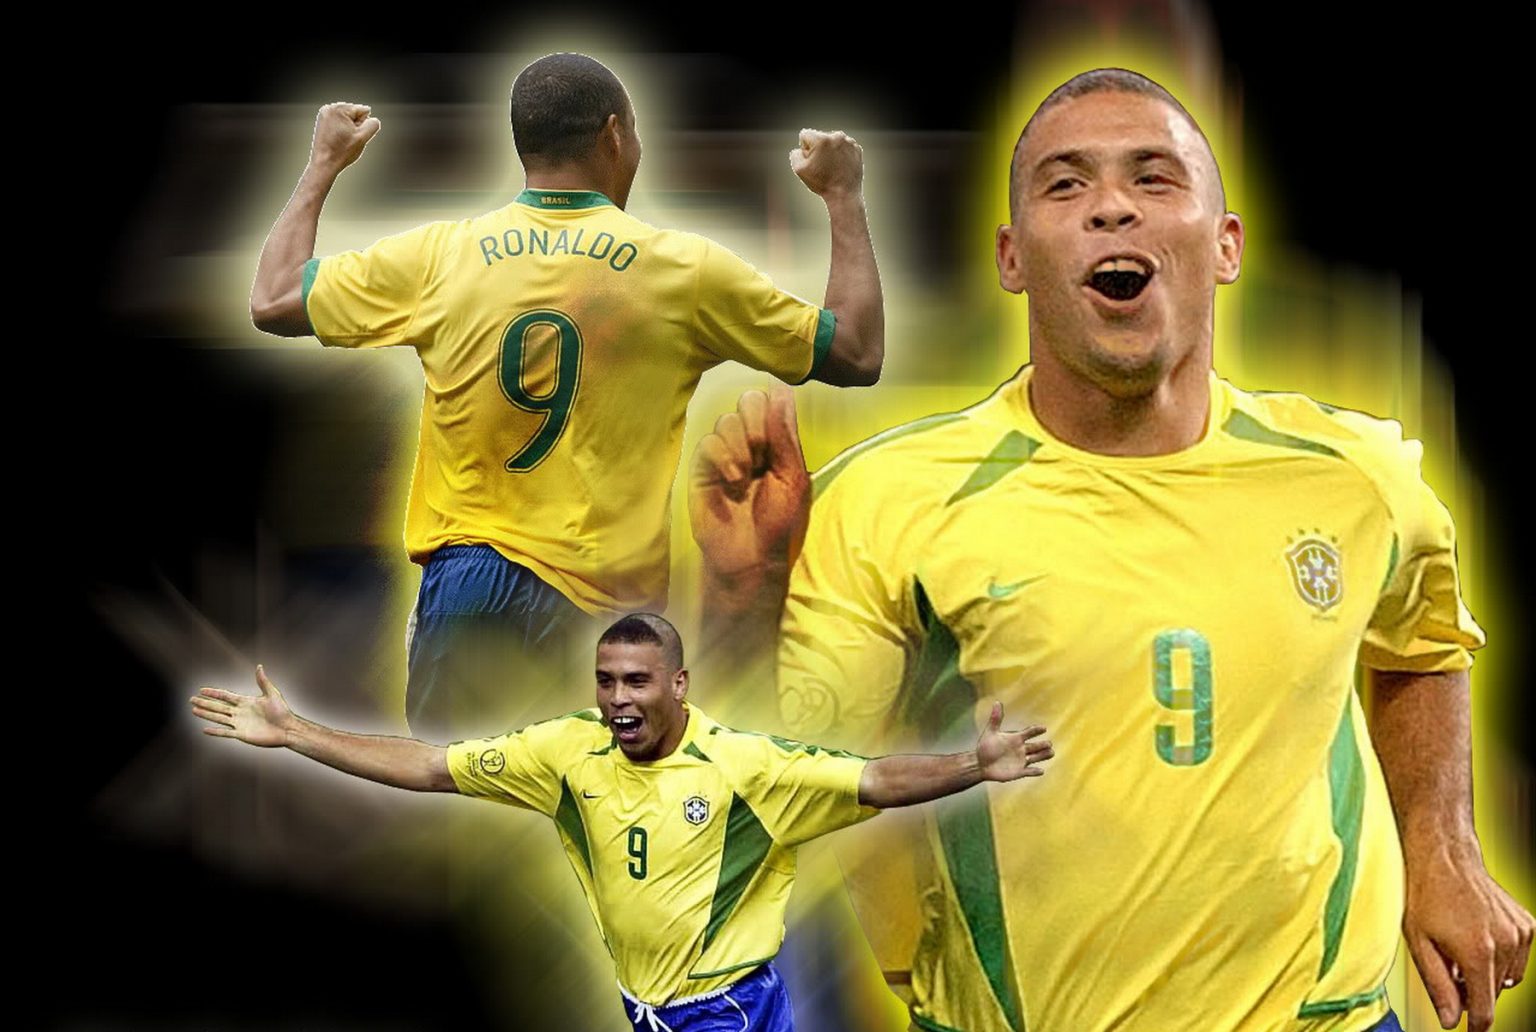 Tiểu sử Ronaldo de Lima – Rô béo huyền thoại